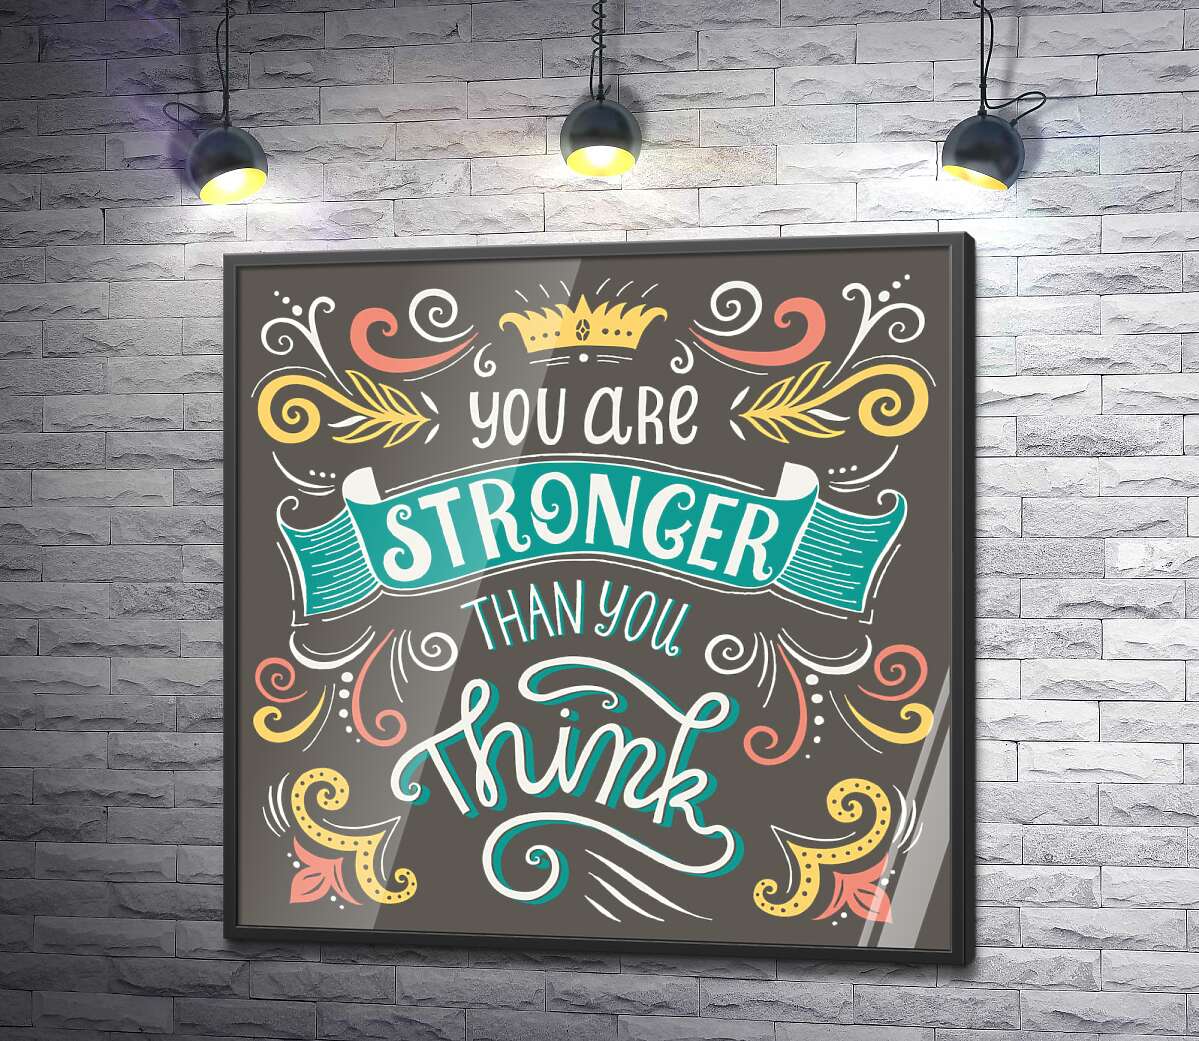 постер Фраза "you are stronger than you think" з квітковими візерунками